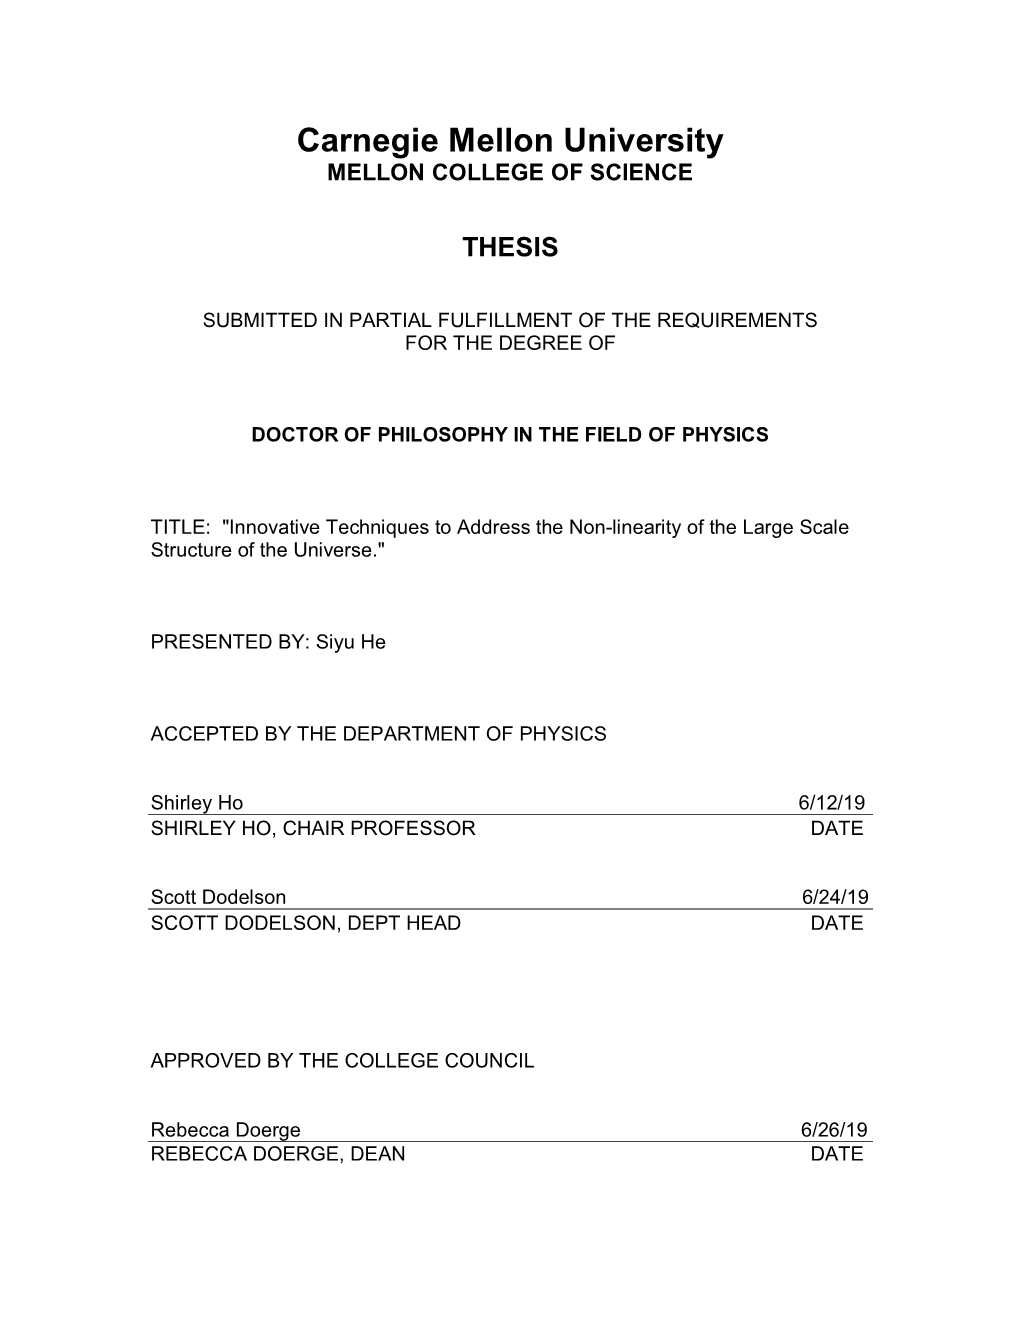 Carnegie Mellon University MELLON COLLEGE of SCIENCE